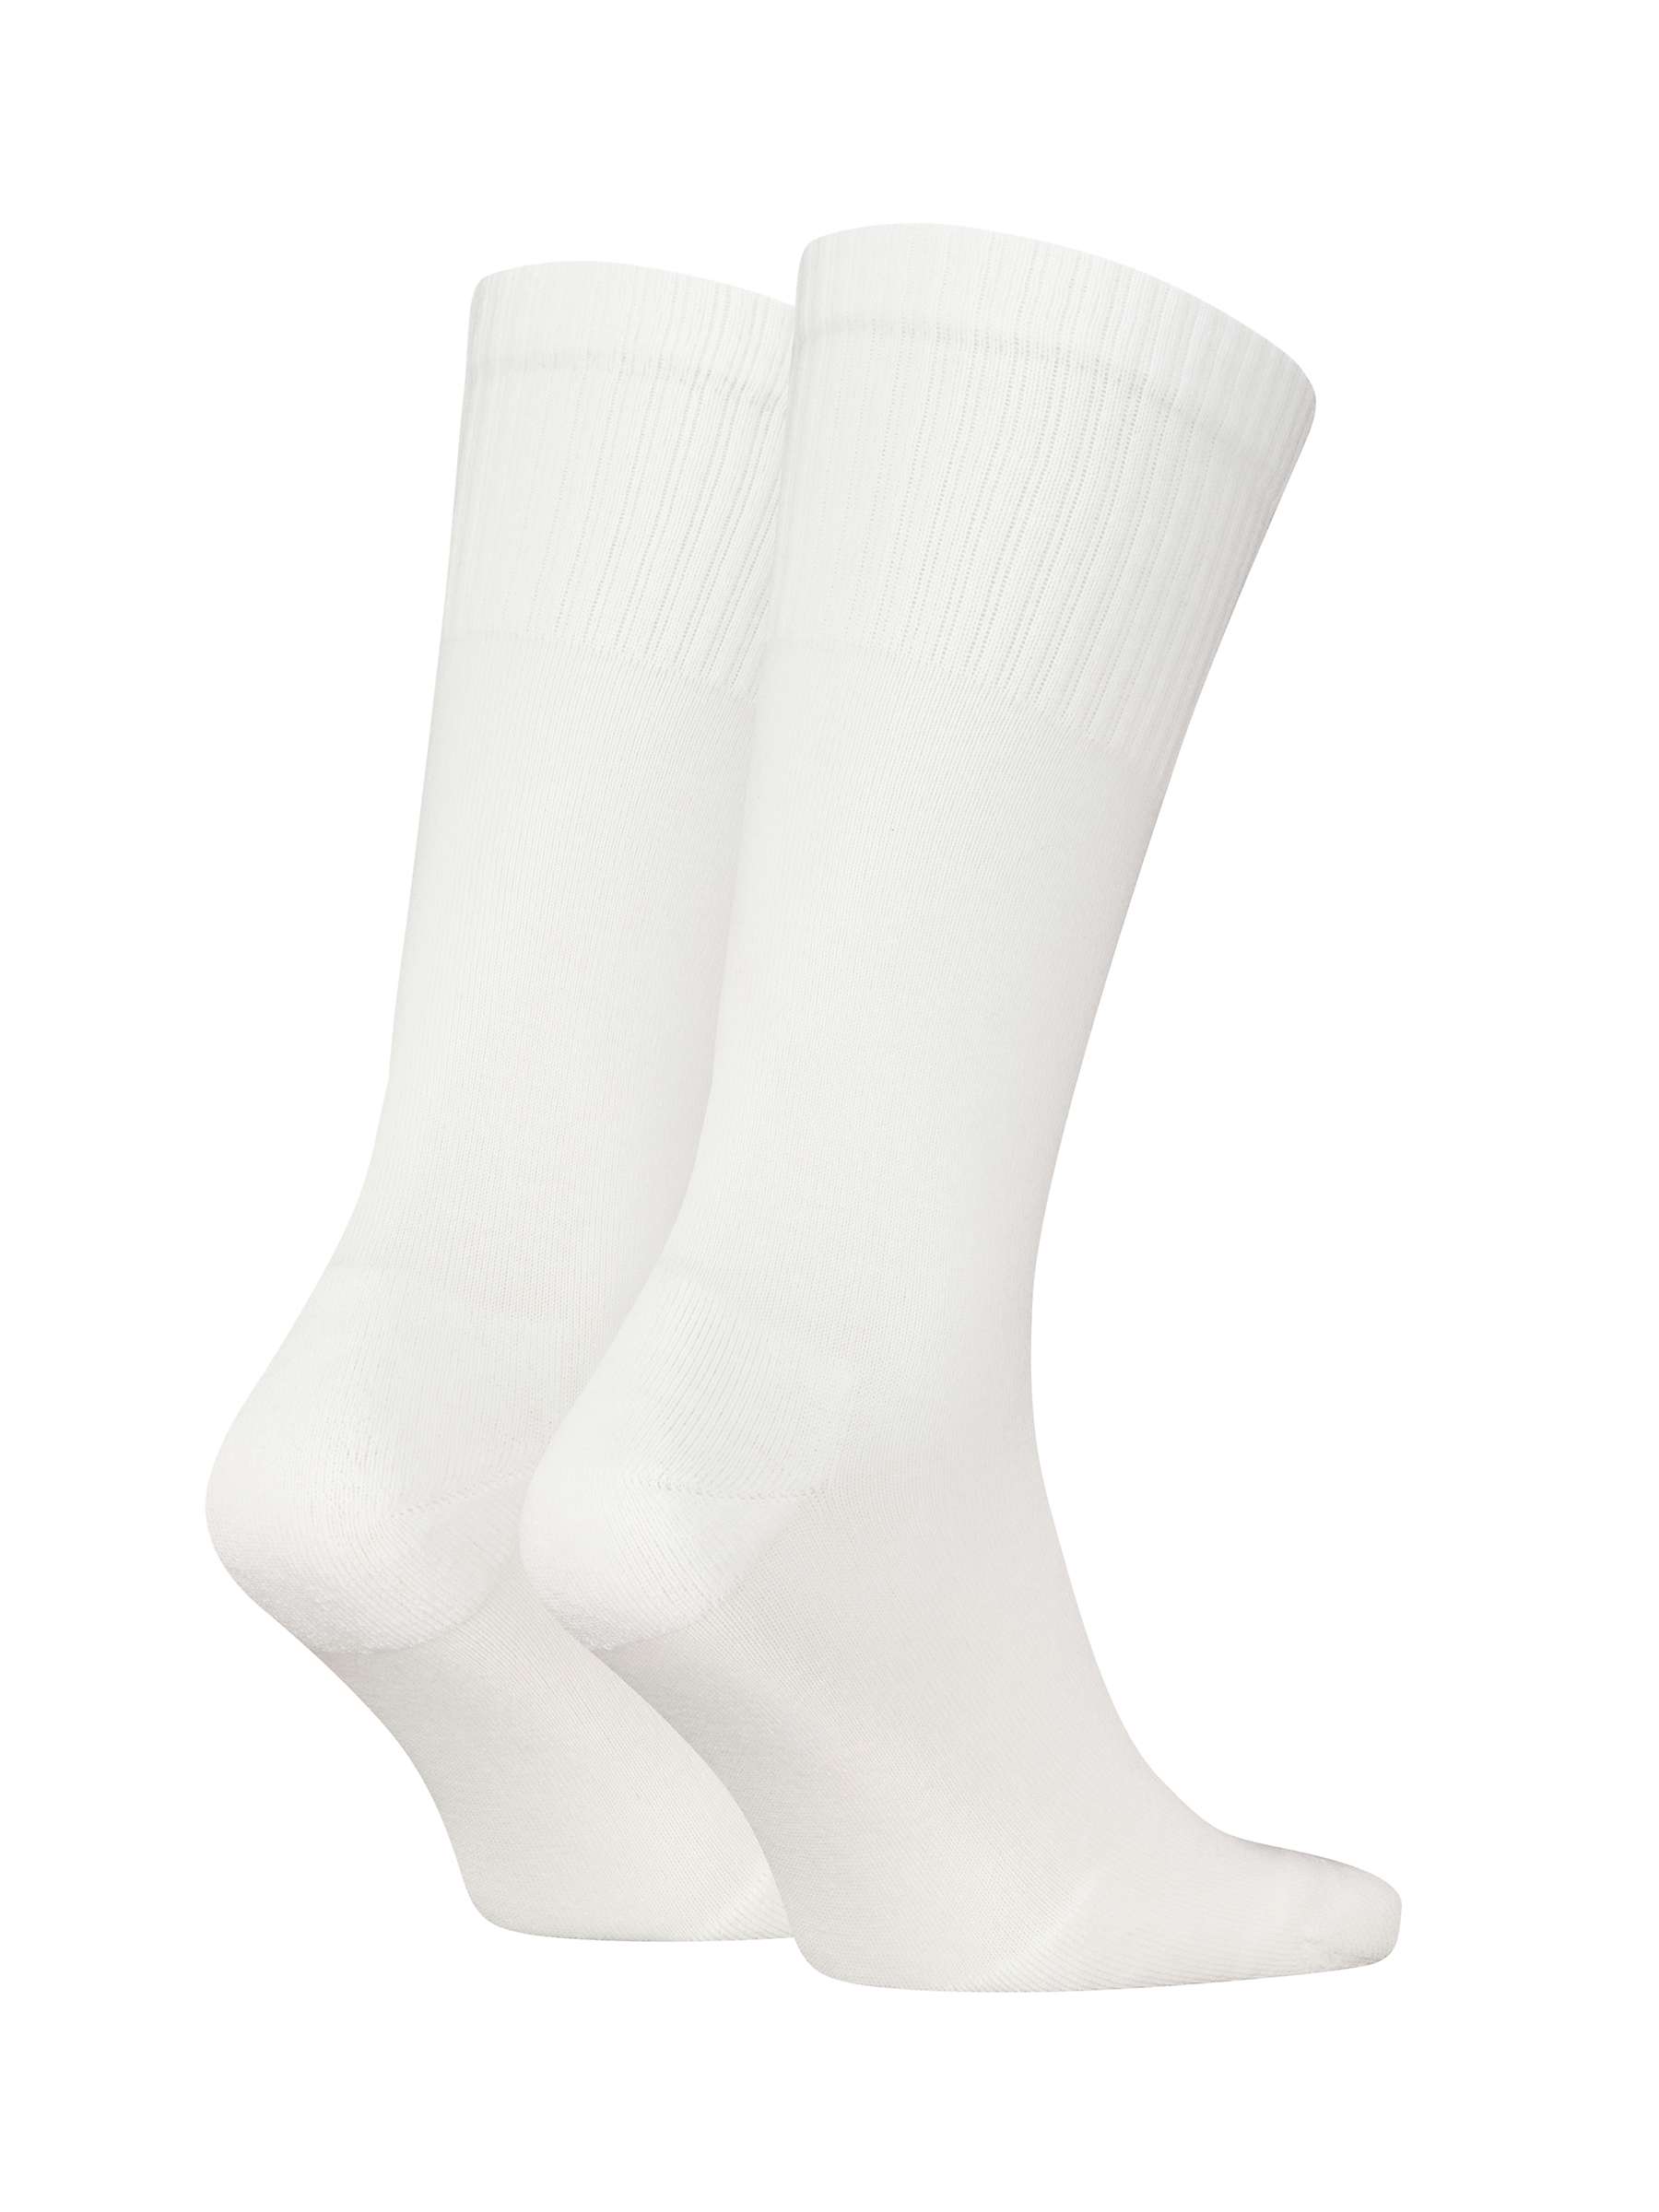 Buy Calvin Klein Pride Crew Socks, Pack of 2, White/Multi Online at johnlewis.com